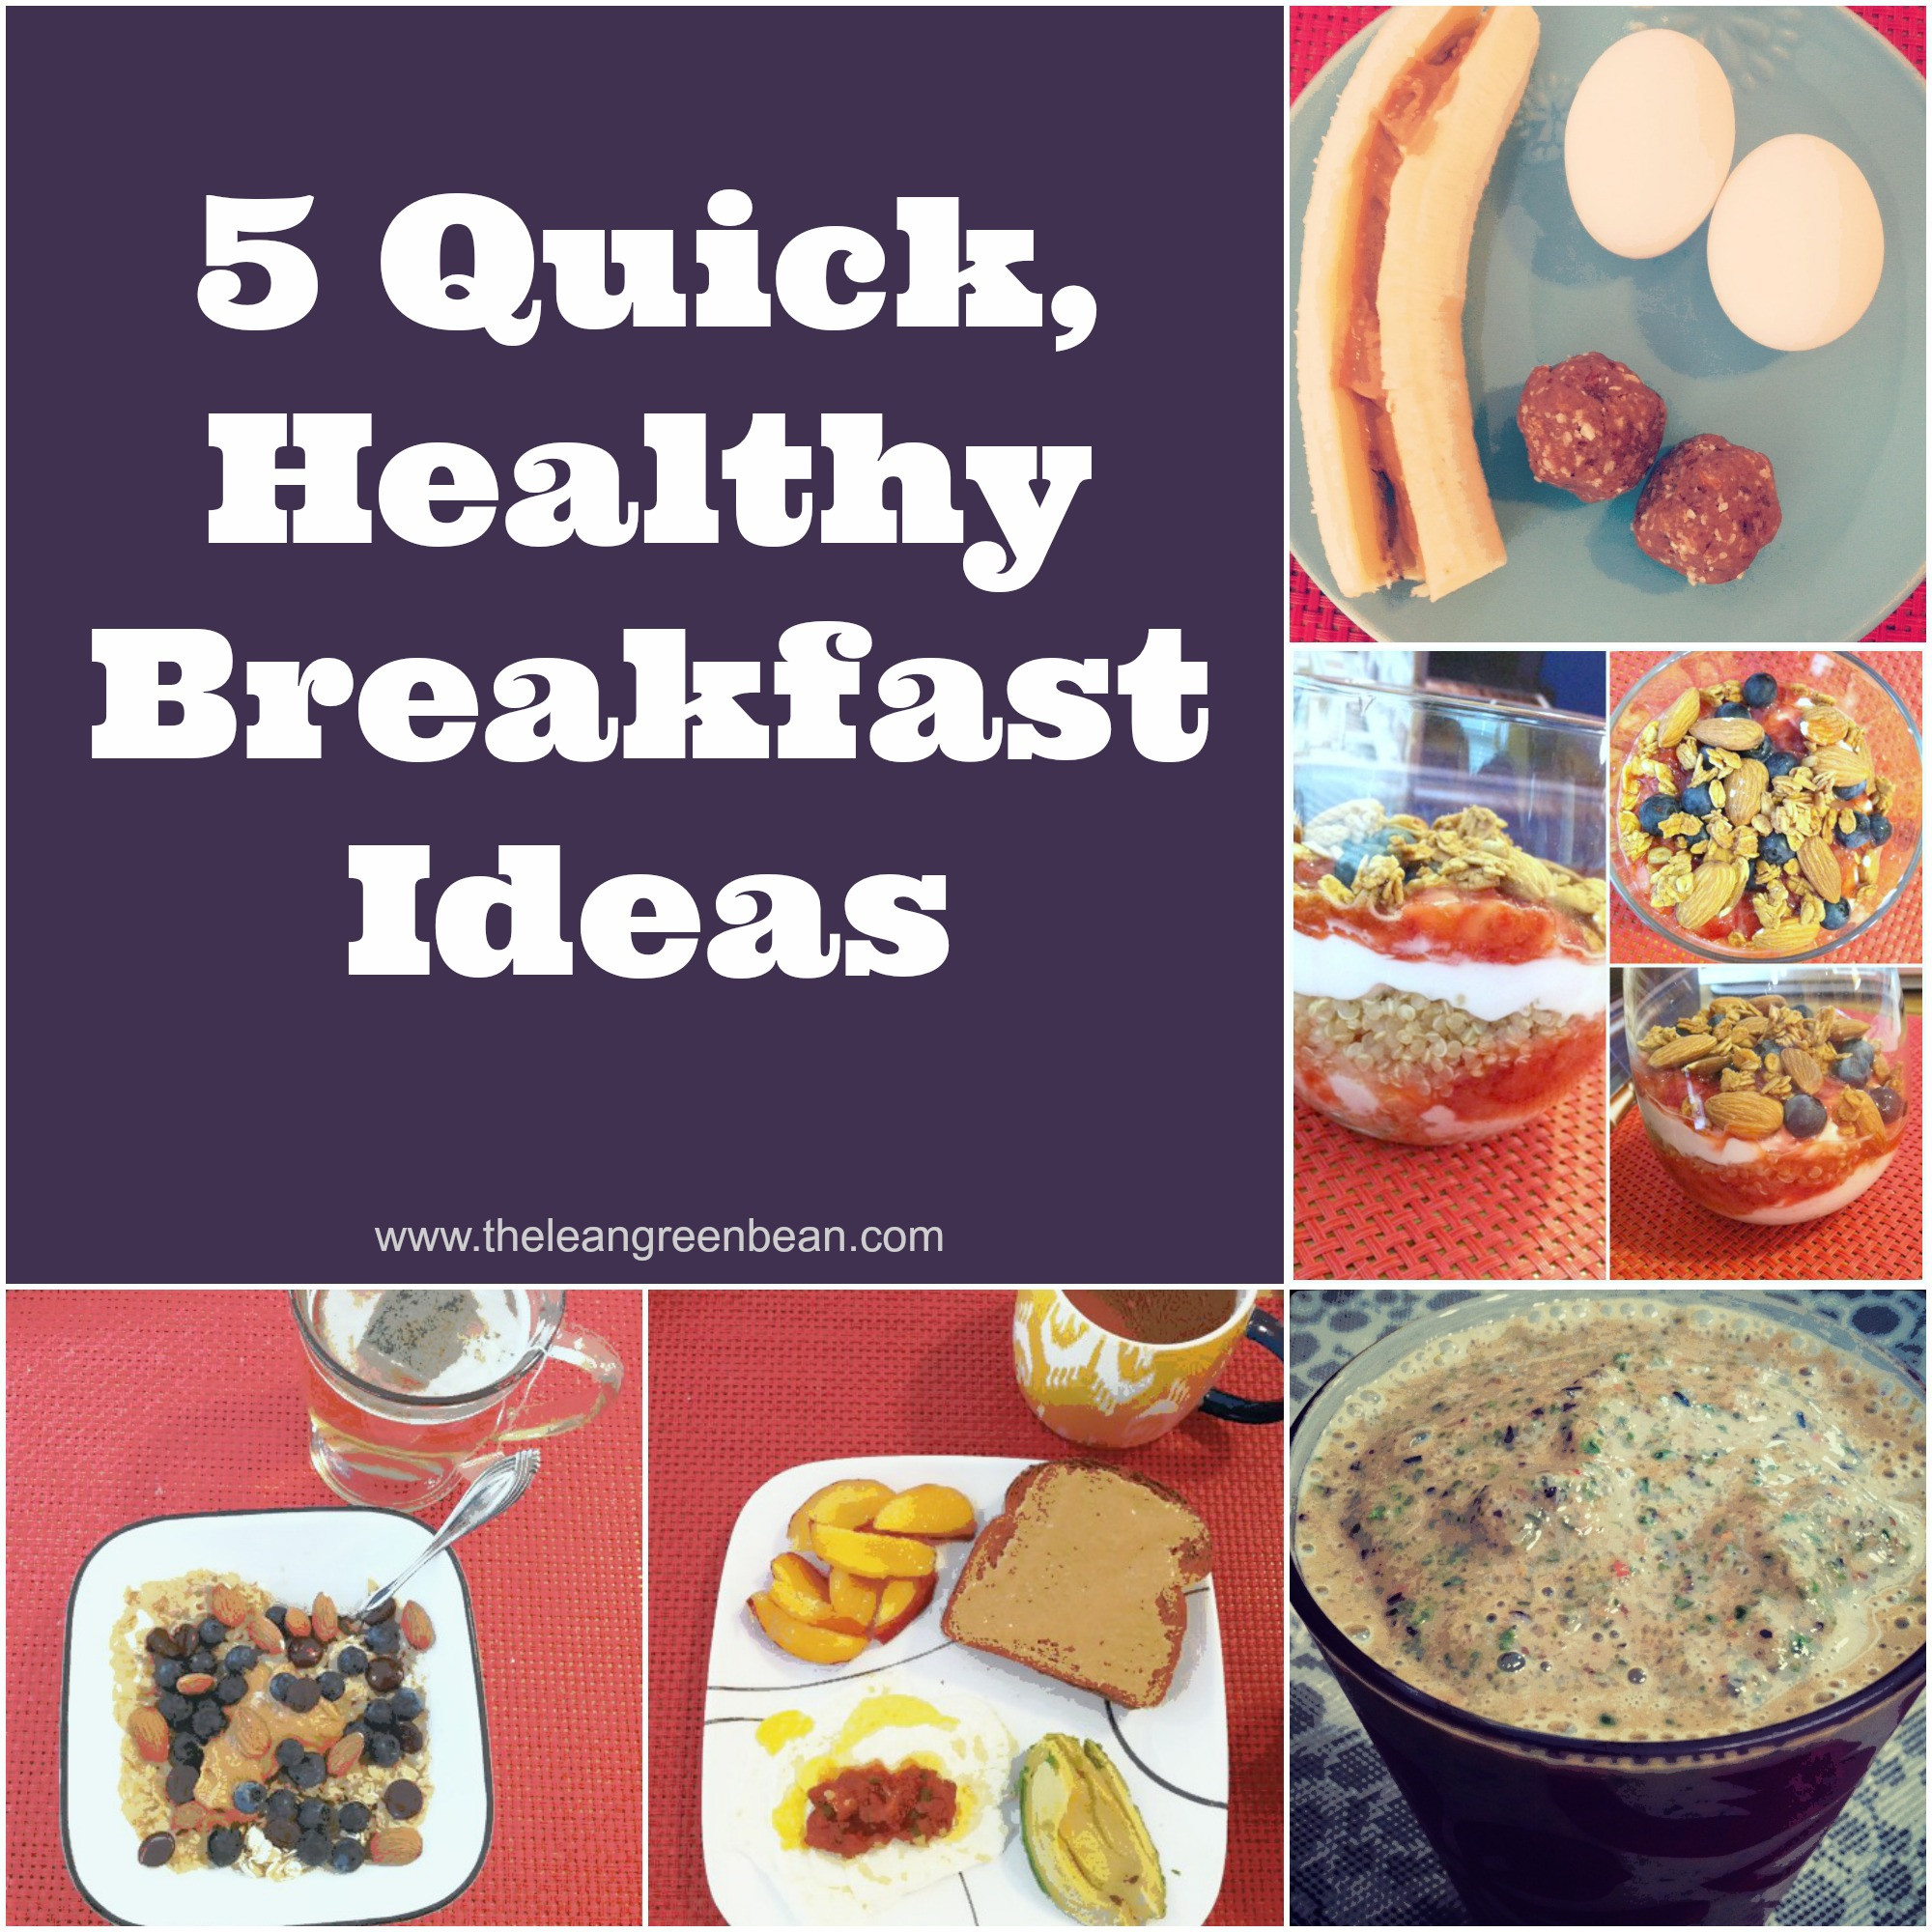 Fast Healthy Breakfast
 5 Quick Healthy Breakfast Ideas from a Registered Dietitian